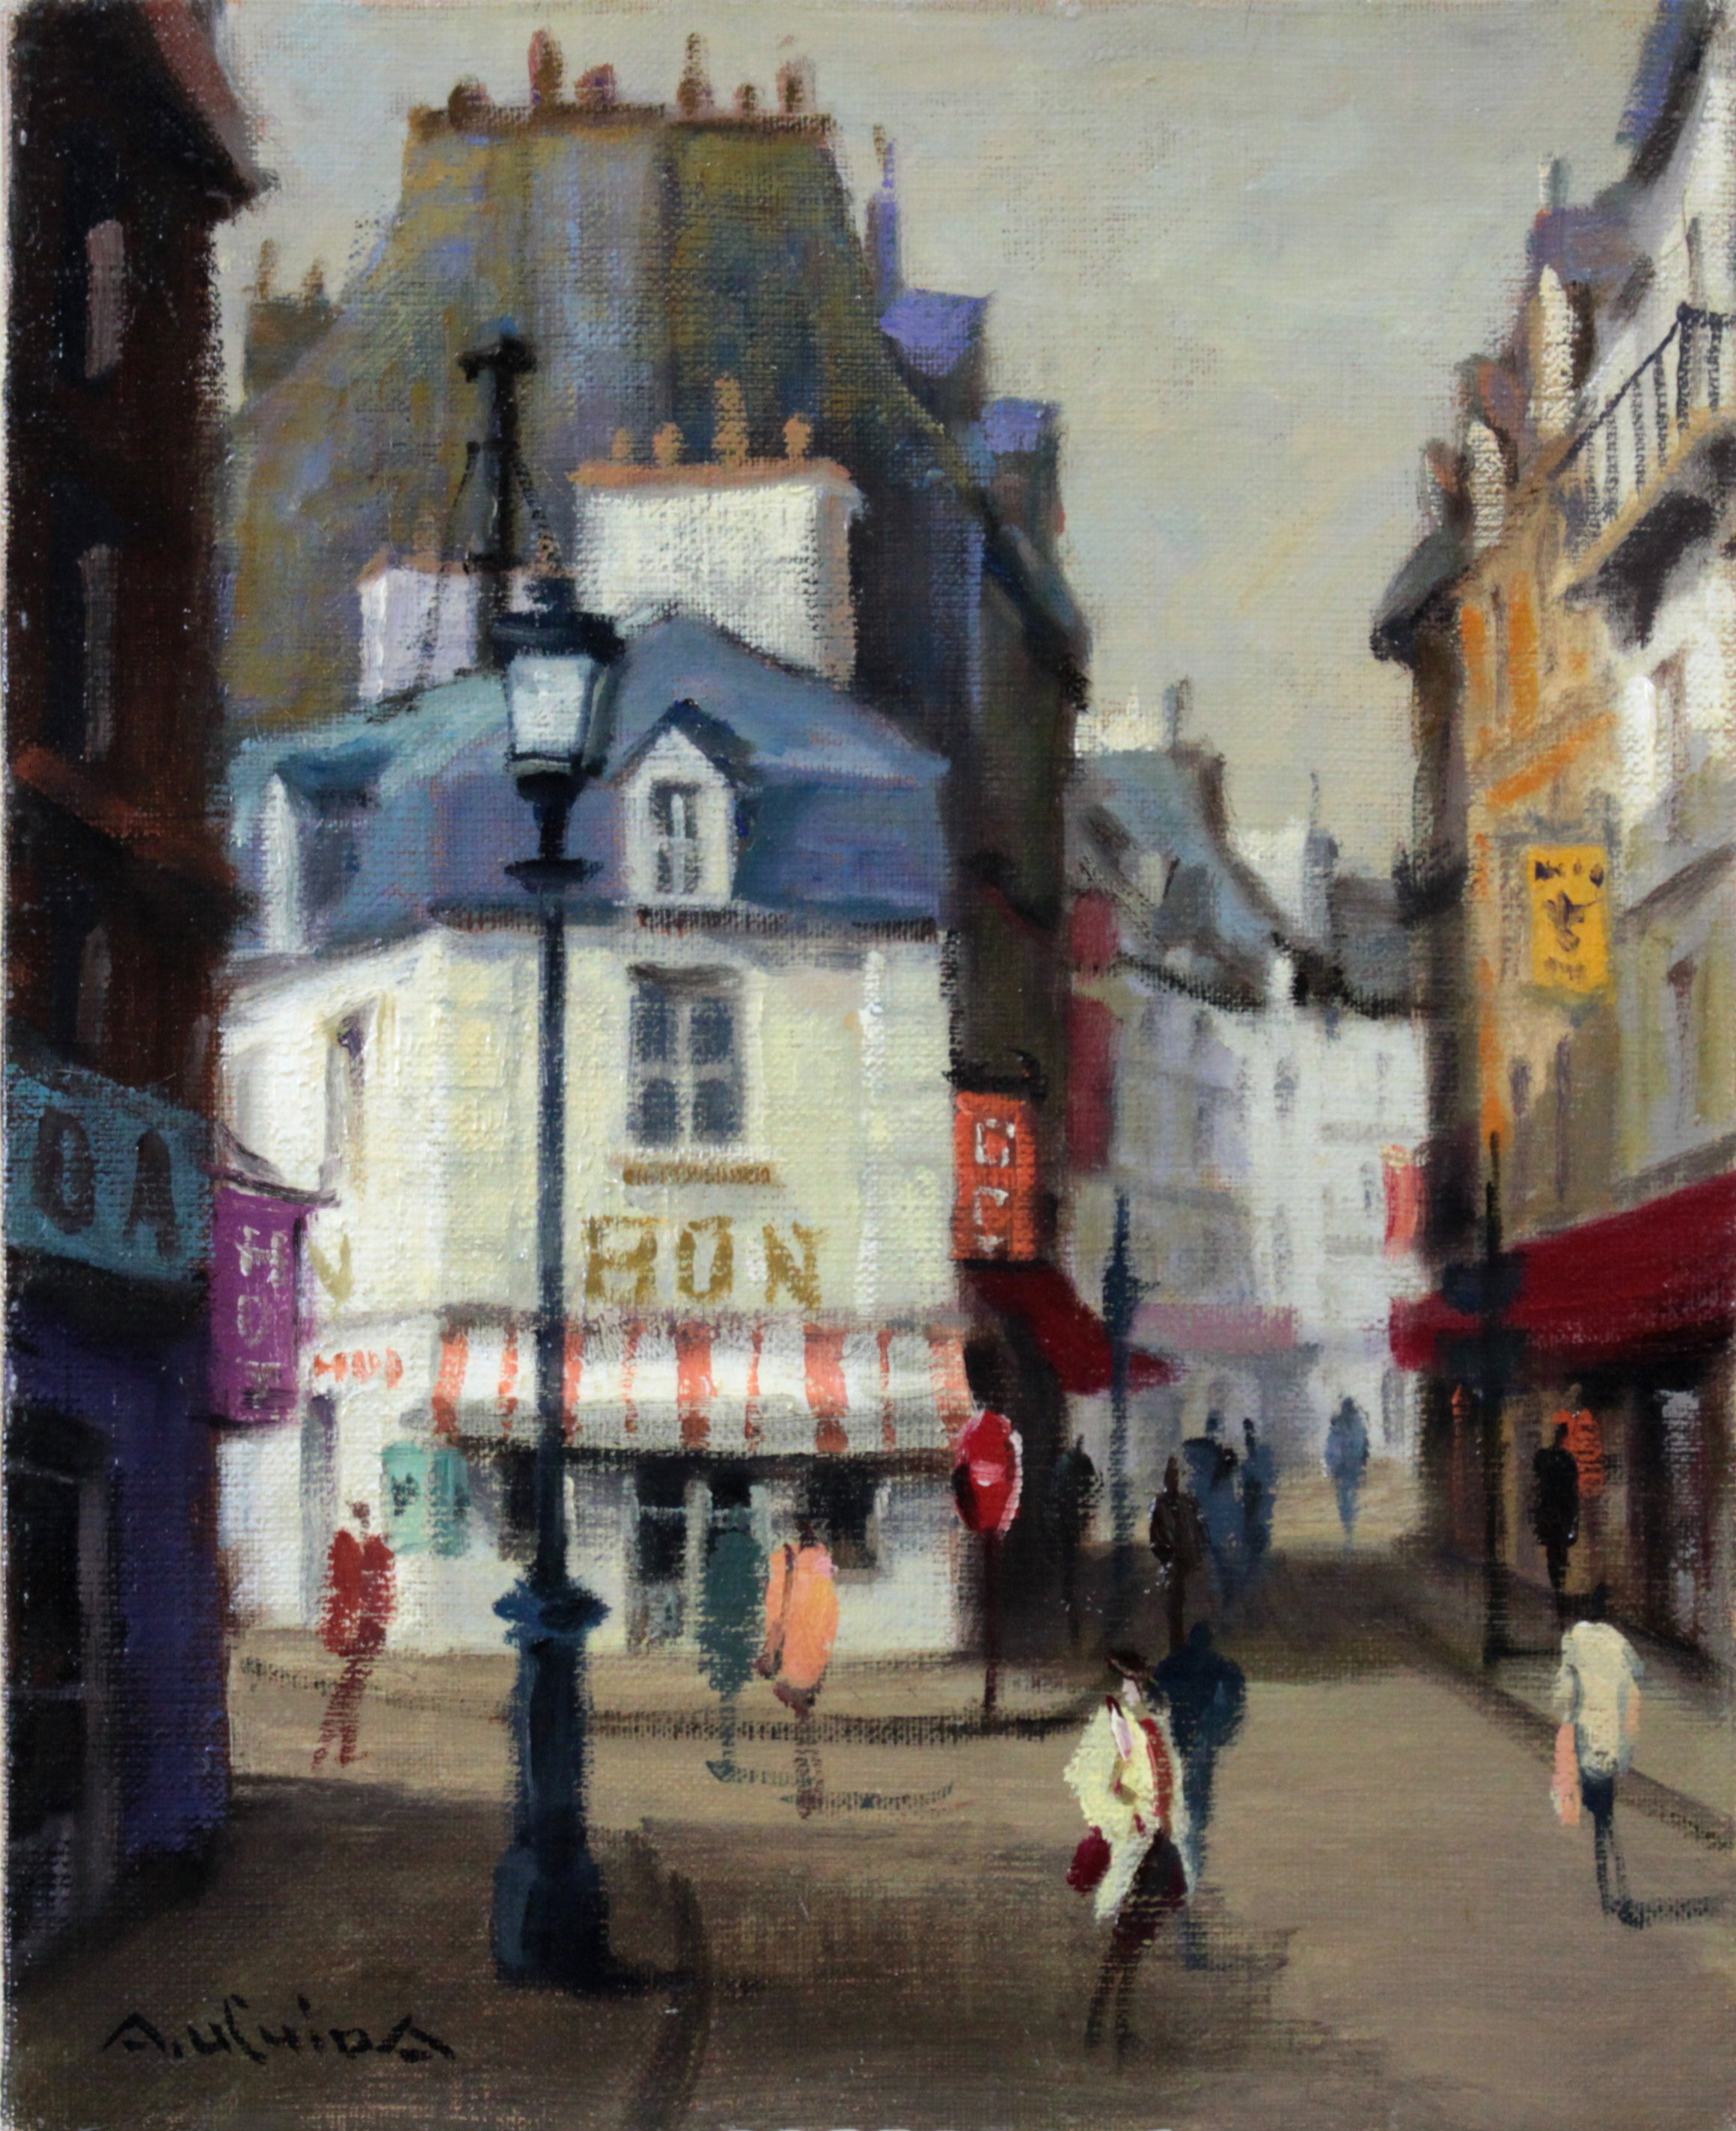 内田 晃 『パリの街角』 油彩画 - 北海道画廊